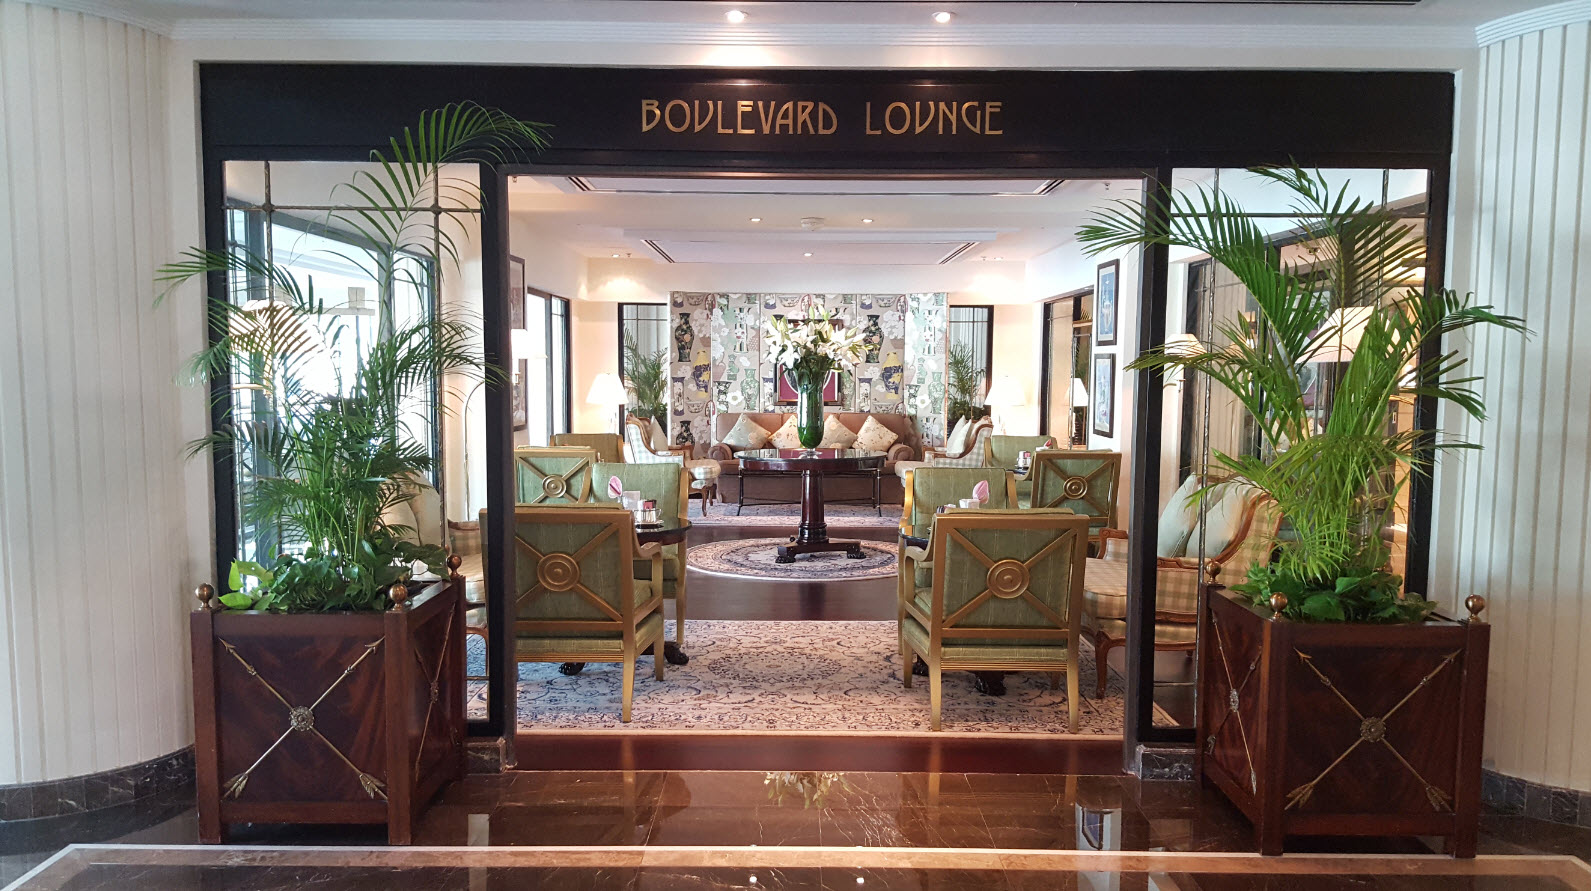 Boulevard Lounge